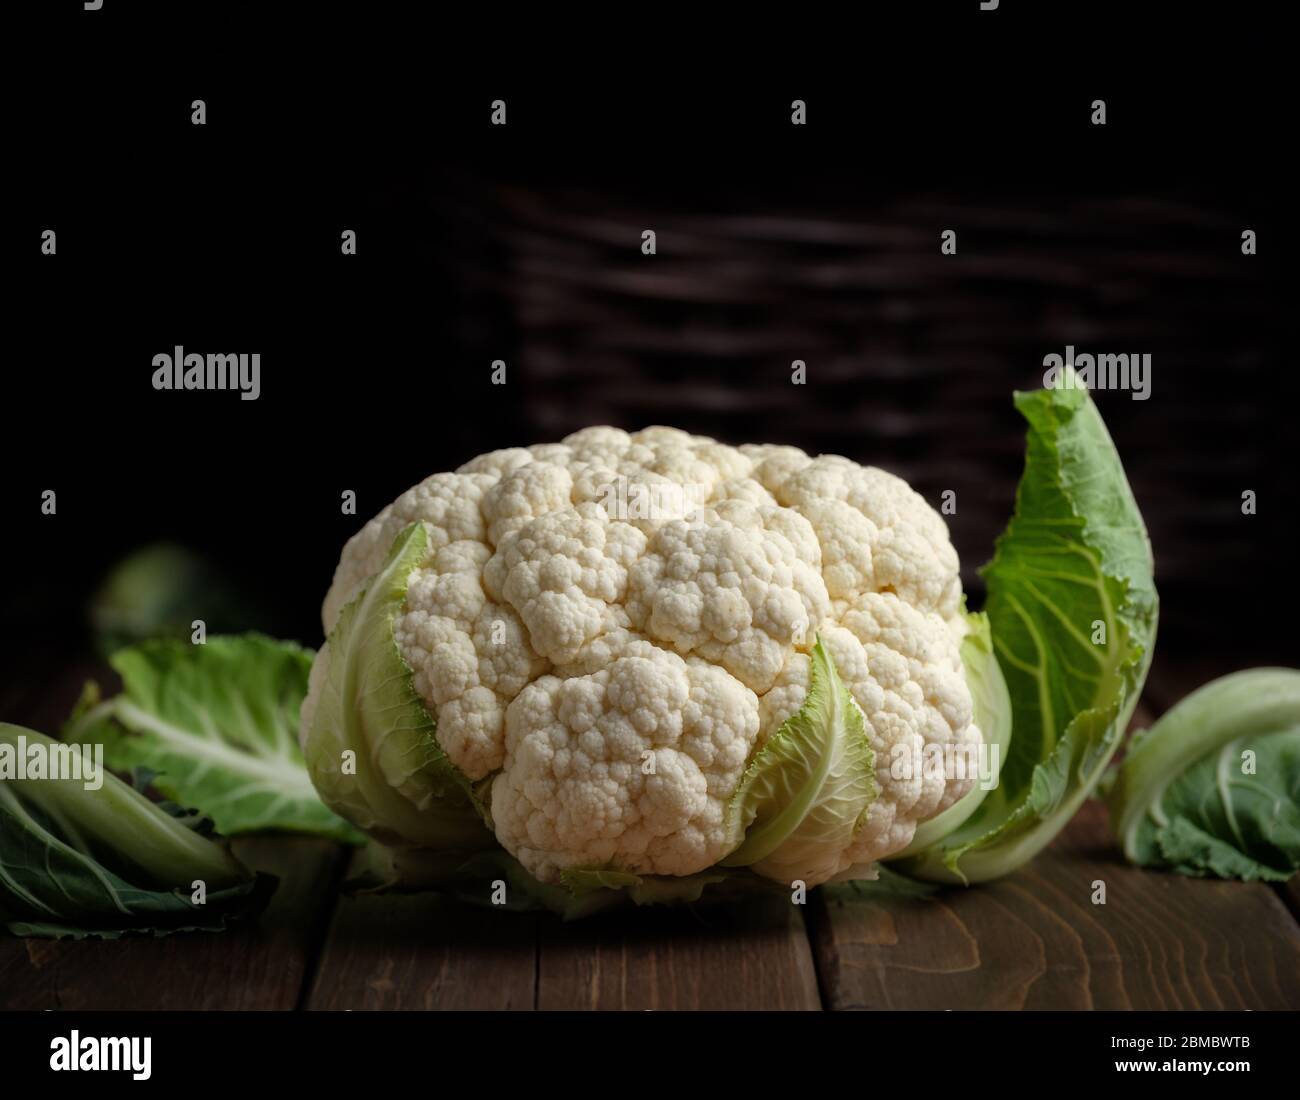 vegetable cauliflower head fresh raw vegan food ingredient still life dark wood background with copy space Stock Photo